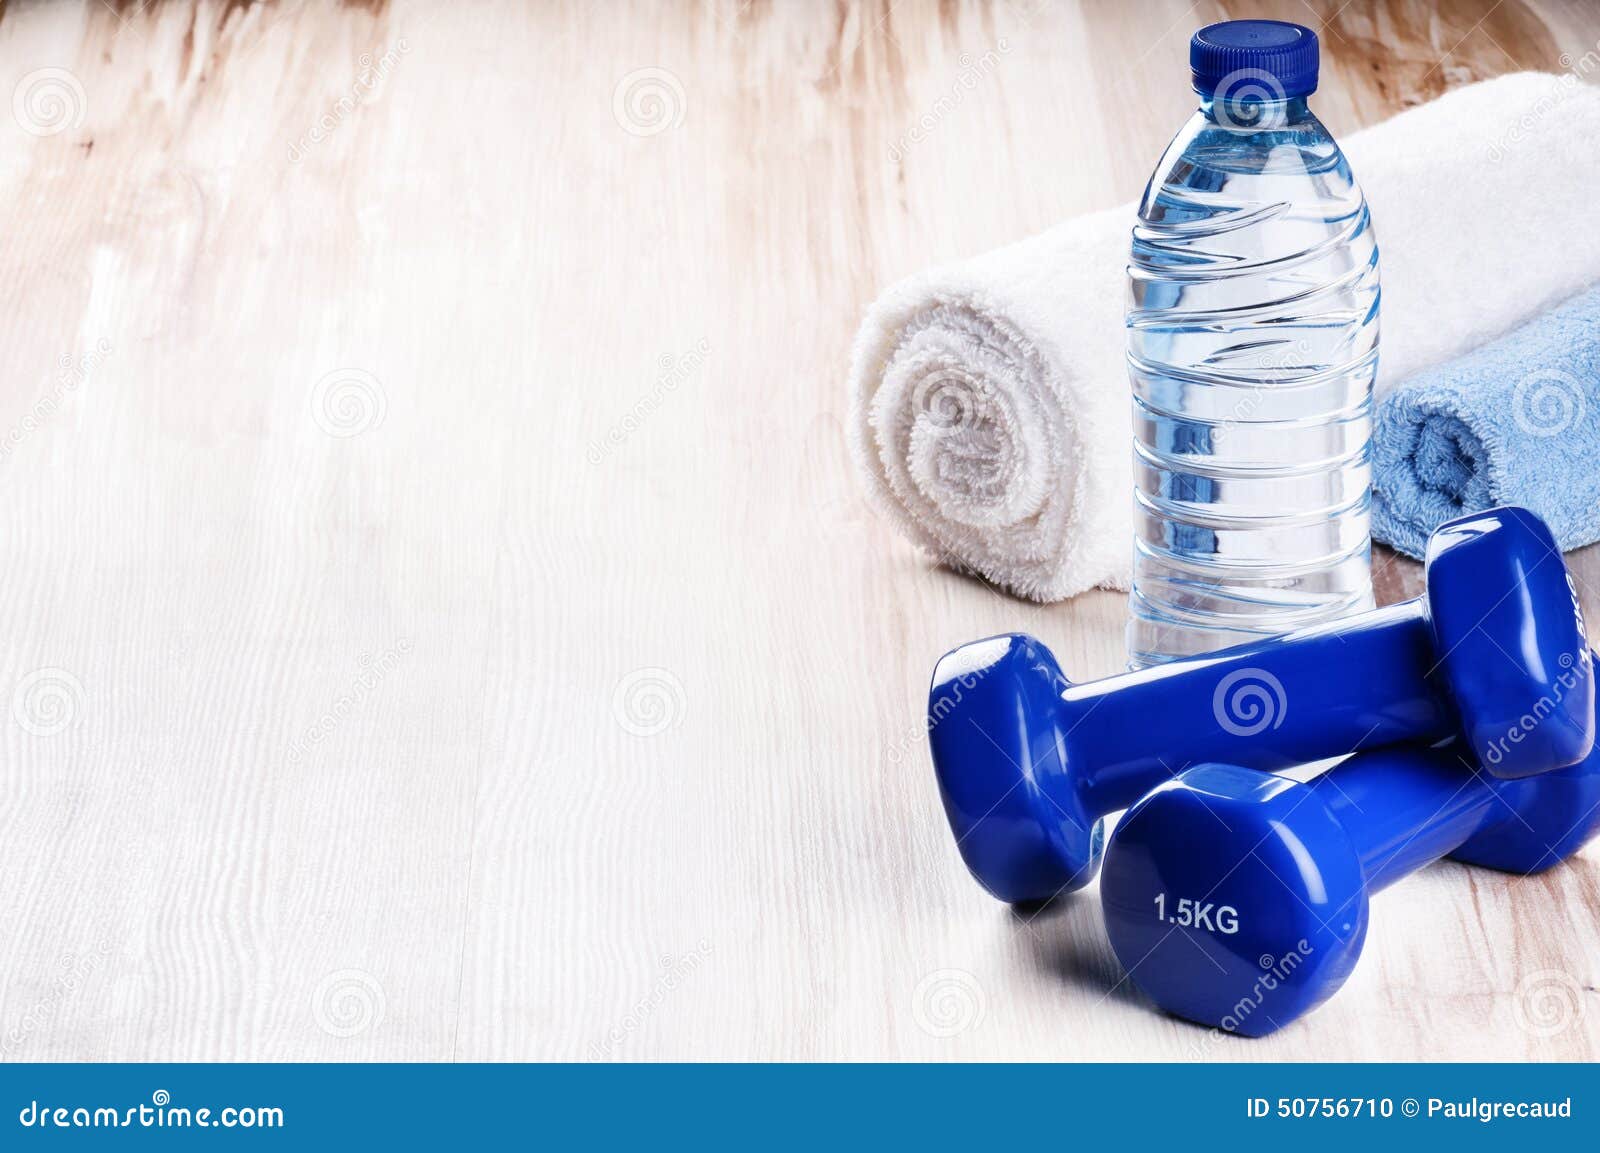 https://thumbs.dreamstime.com/z/fitness-concept-dumbbells-water-bottle-workout-setting-50756710.jpg